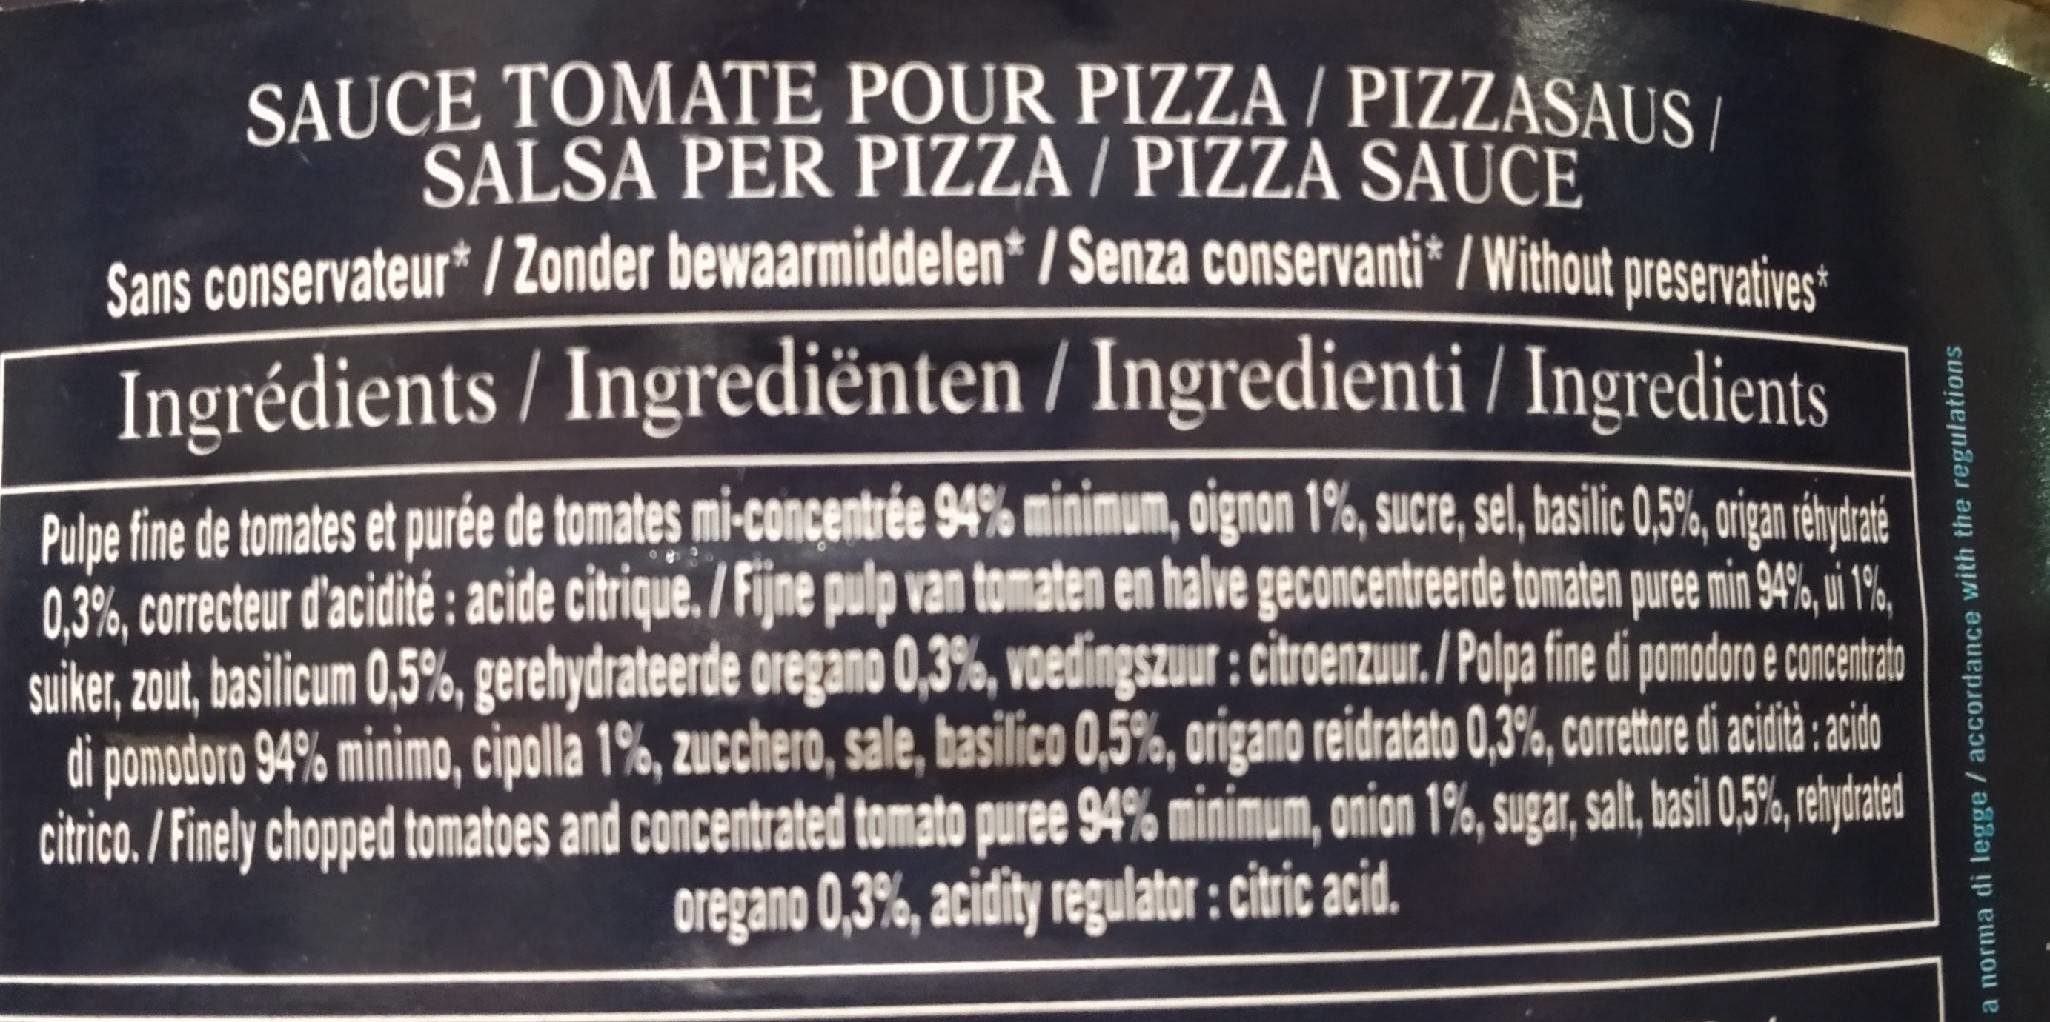 Pizza sauce cuisinee - Ingredients - fr